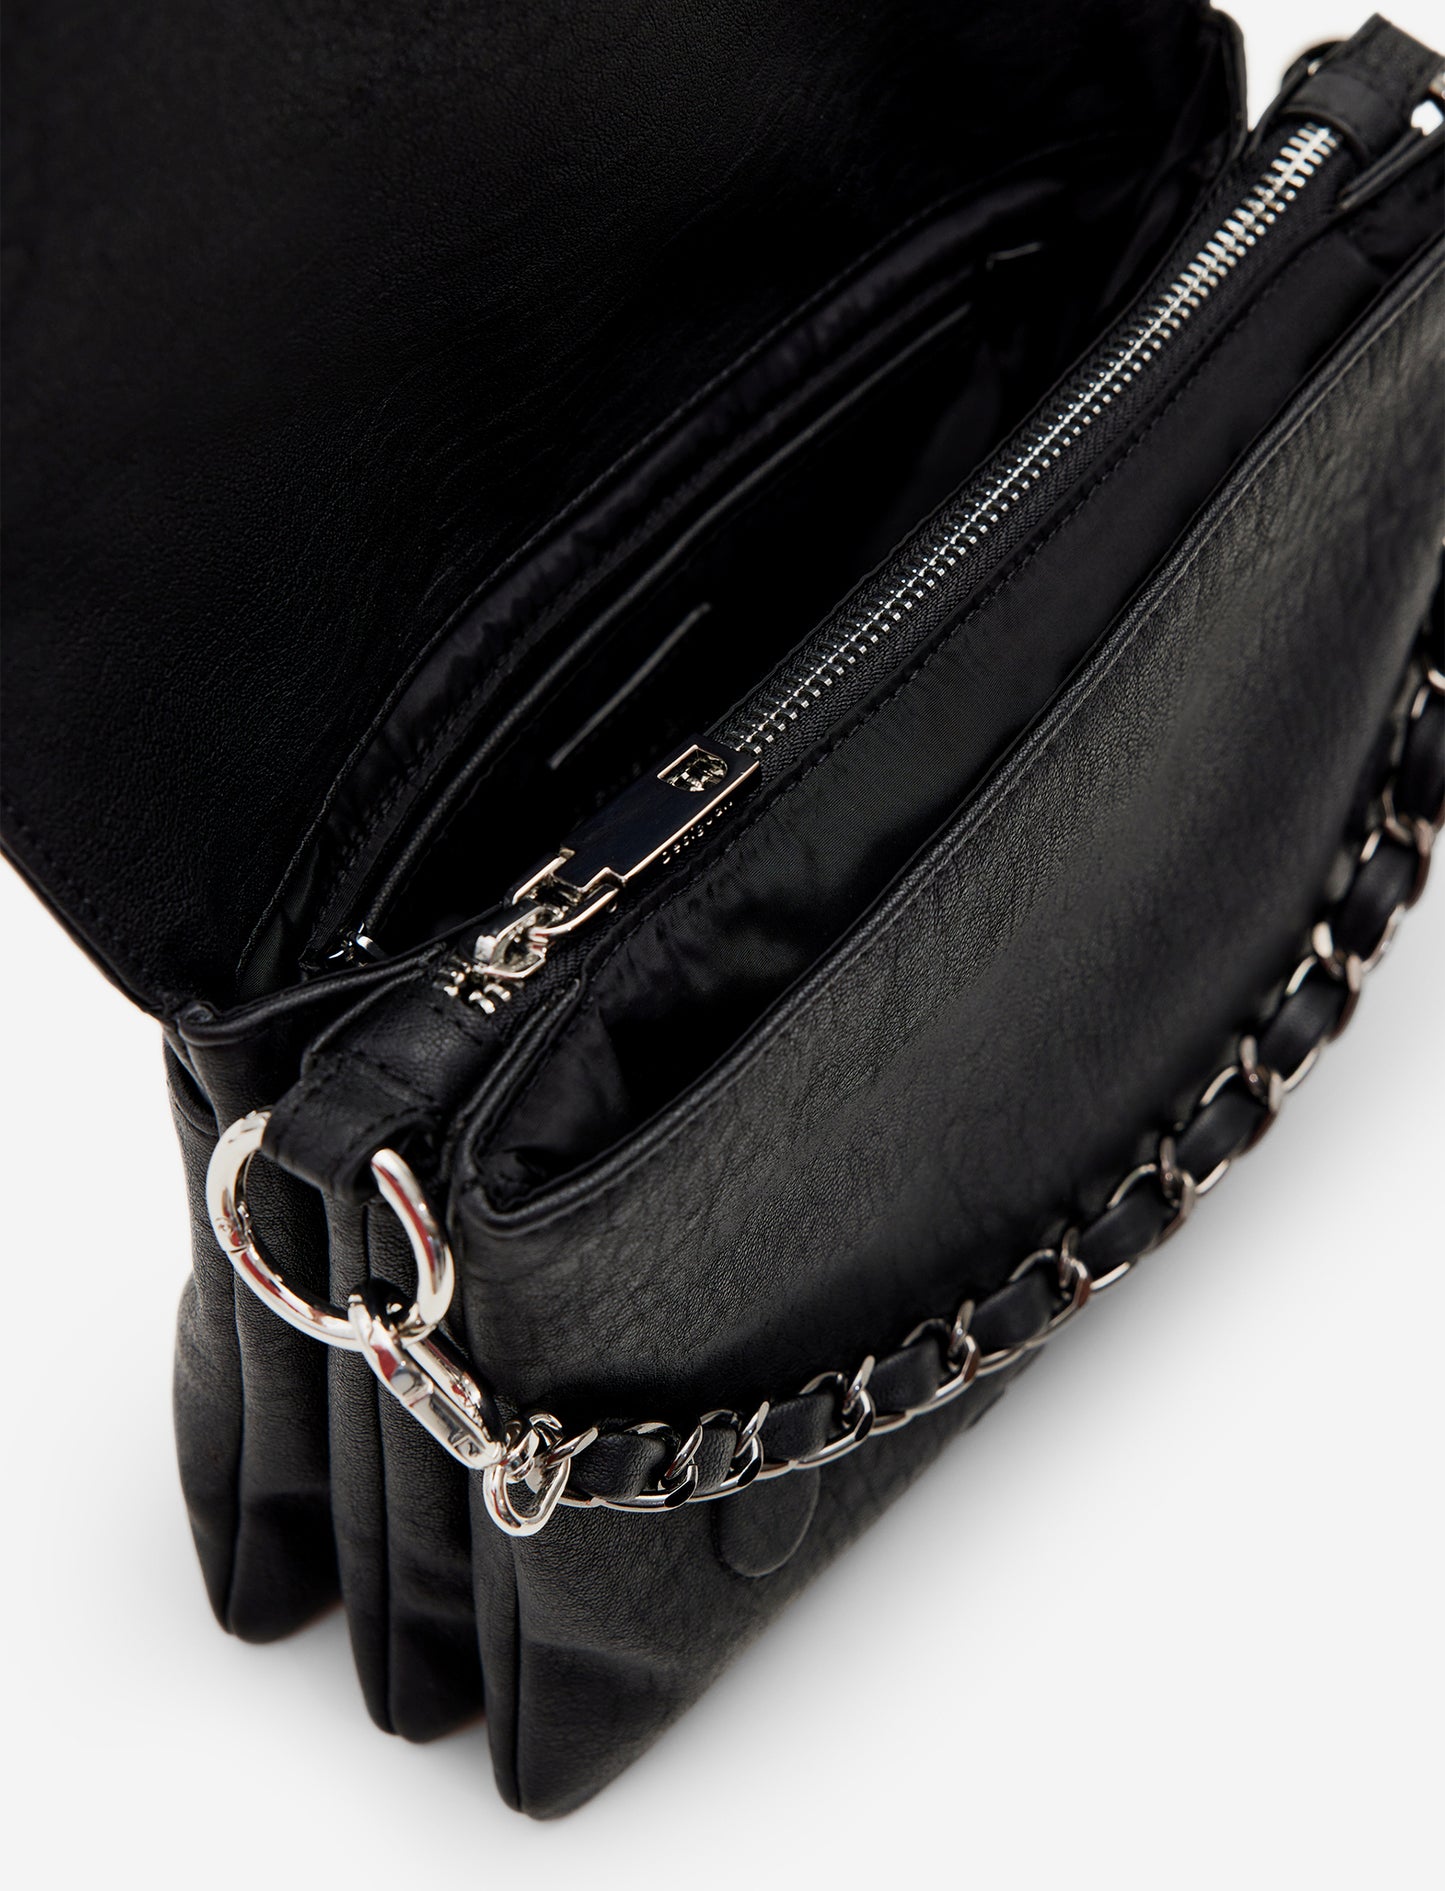 Desigual Bag Mickey Rock Dortmund Flap 2.0 - תיק קרוסבודי בינוני בצבע שחור